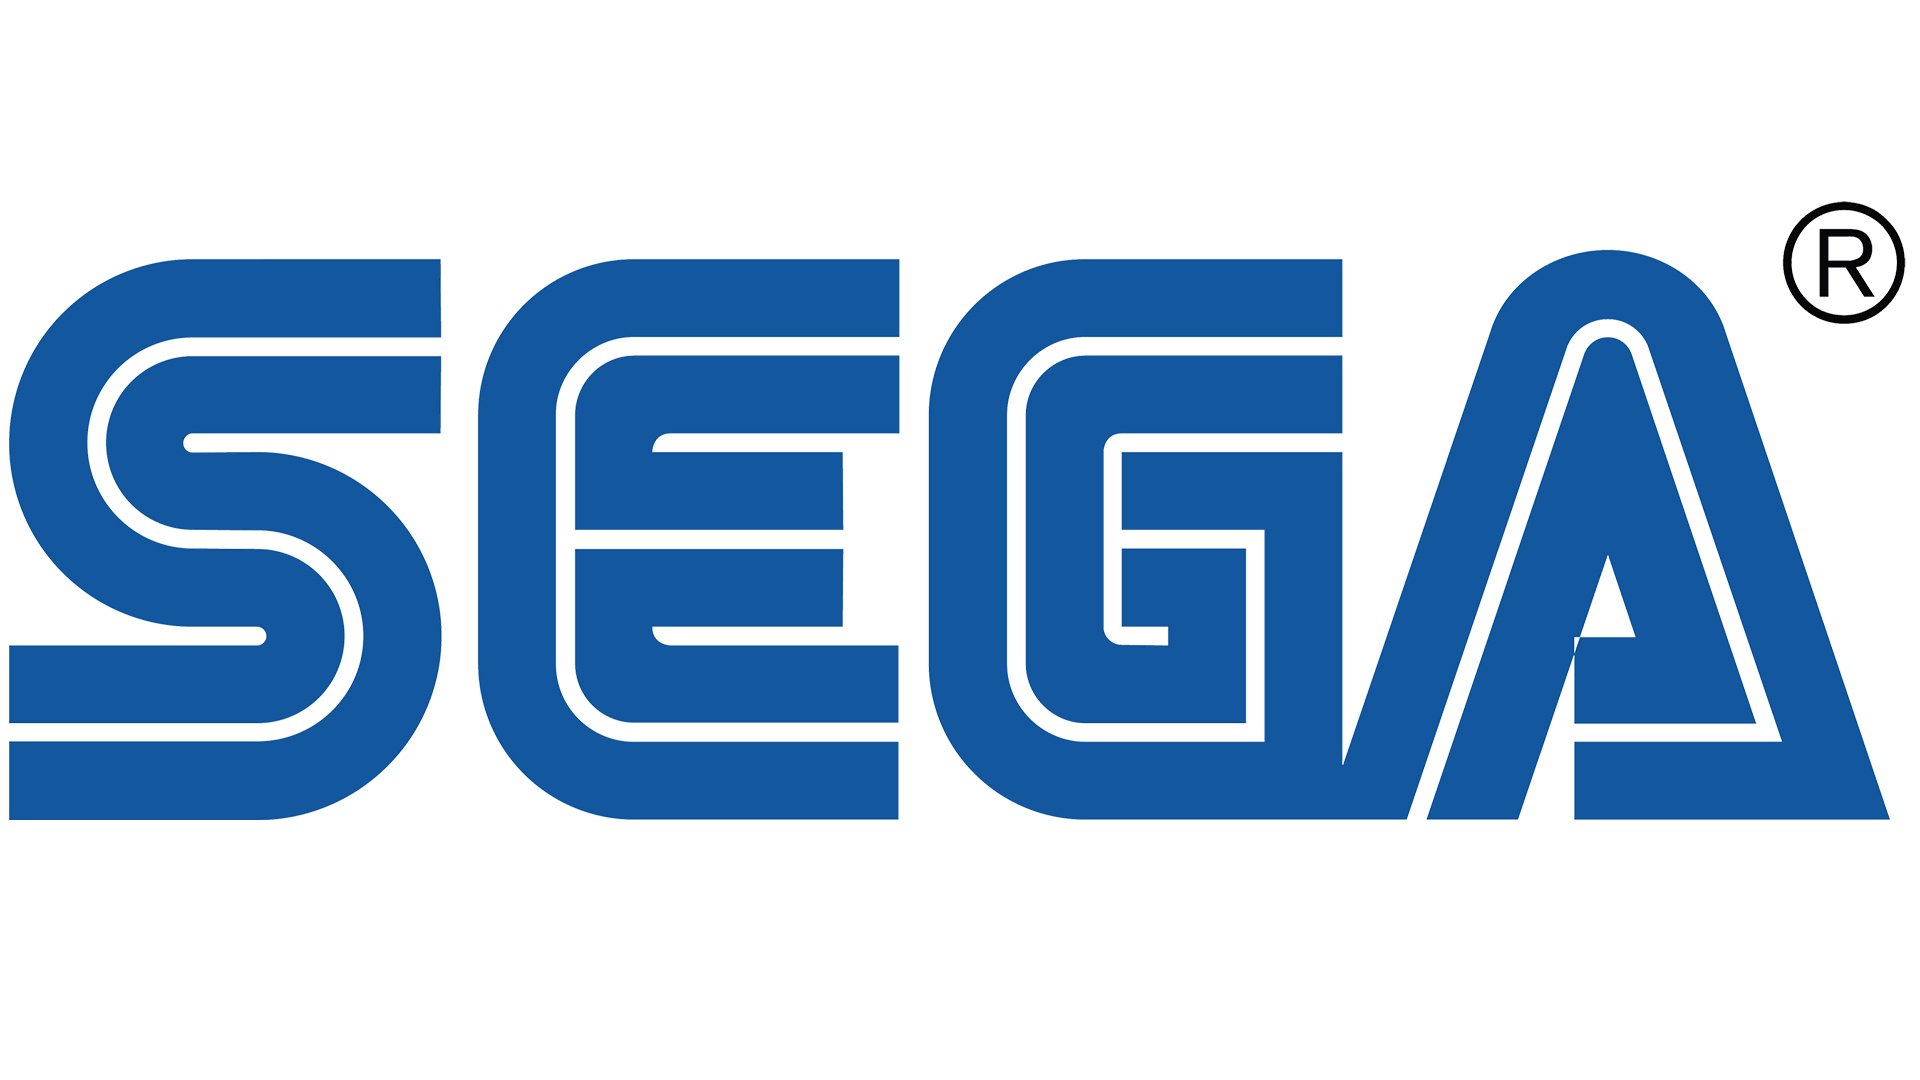 Sega Dreamer